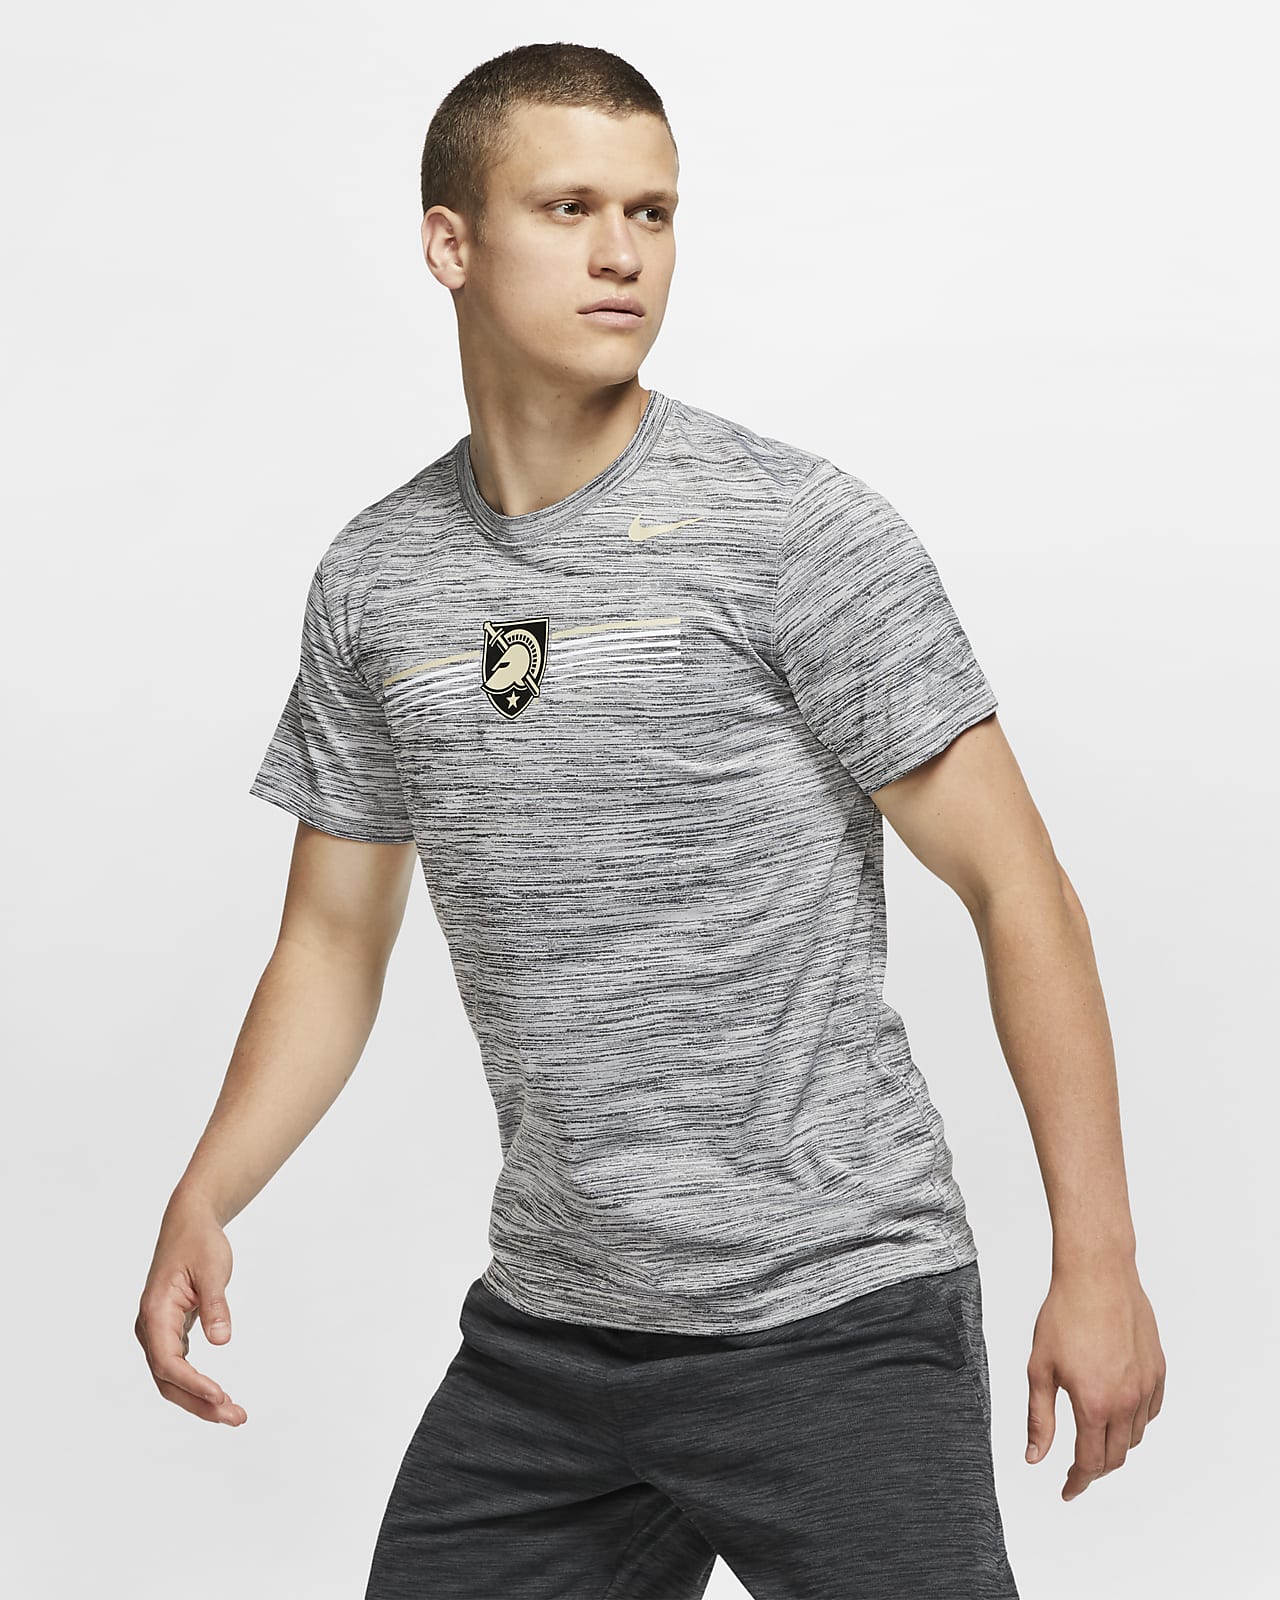 Nike College Dri-FIT Legend Velocity (Army) Men's T-Shirt